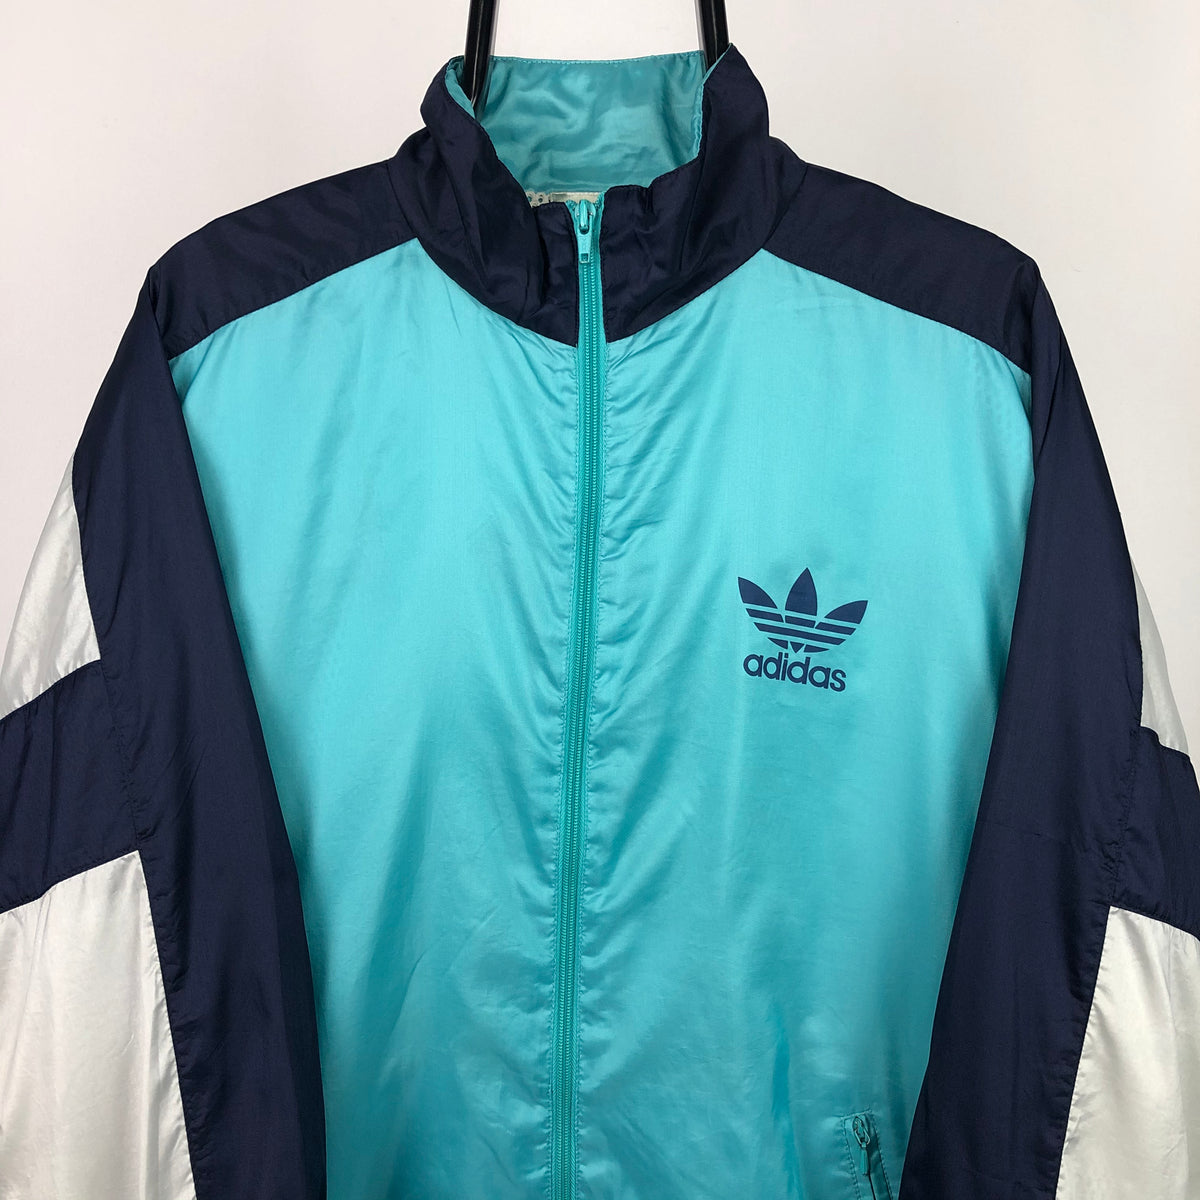 Vintage 90s Adidas Track Jacket in Turquoise/Navy/White - Men's Large ...